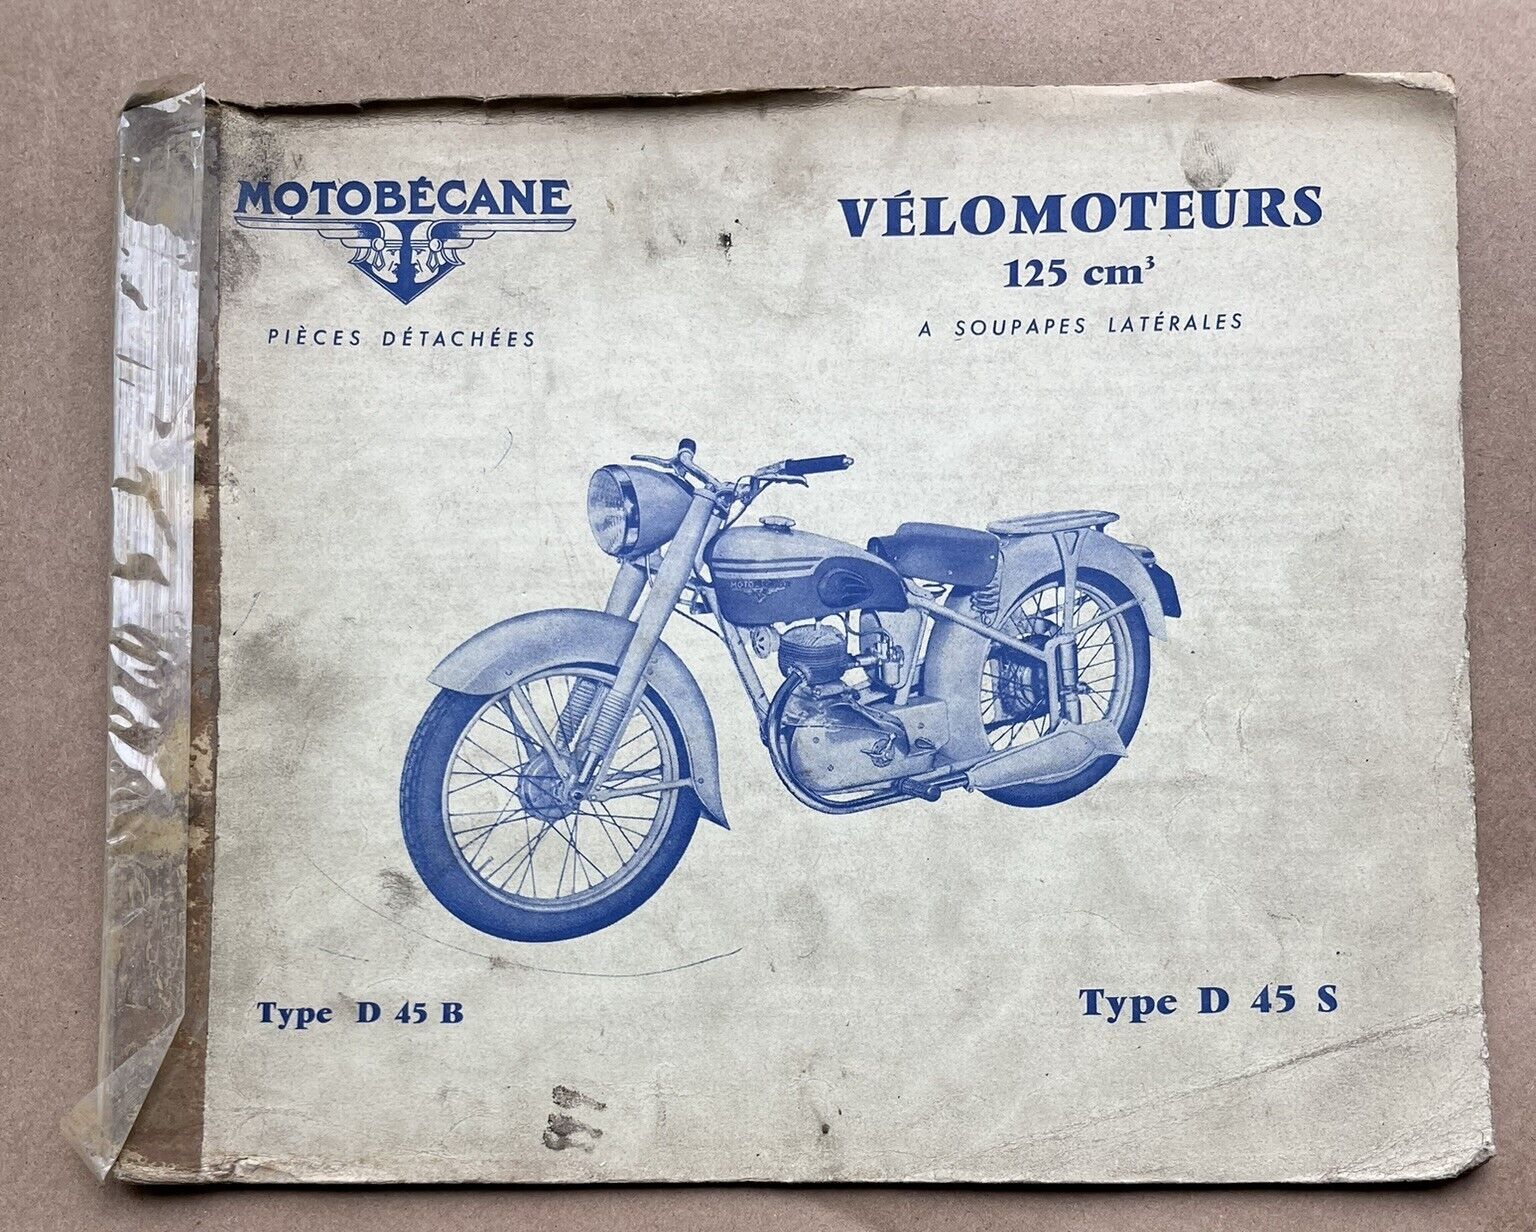 Motobecane Motoconfort Velomoteurs 125 cm3 Type D45 BS Spare Part Catalog French